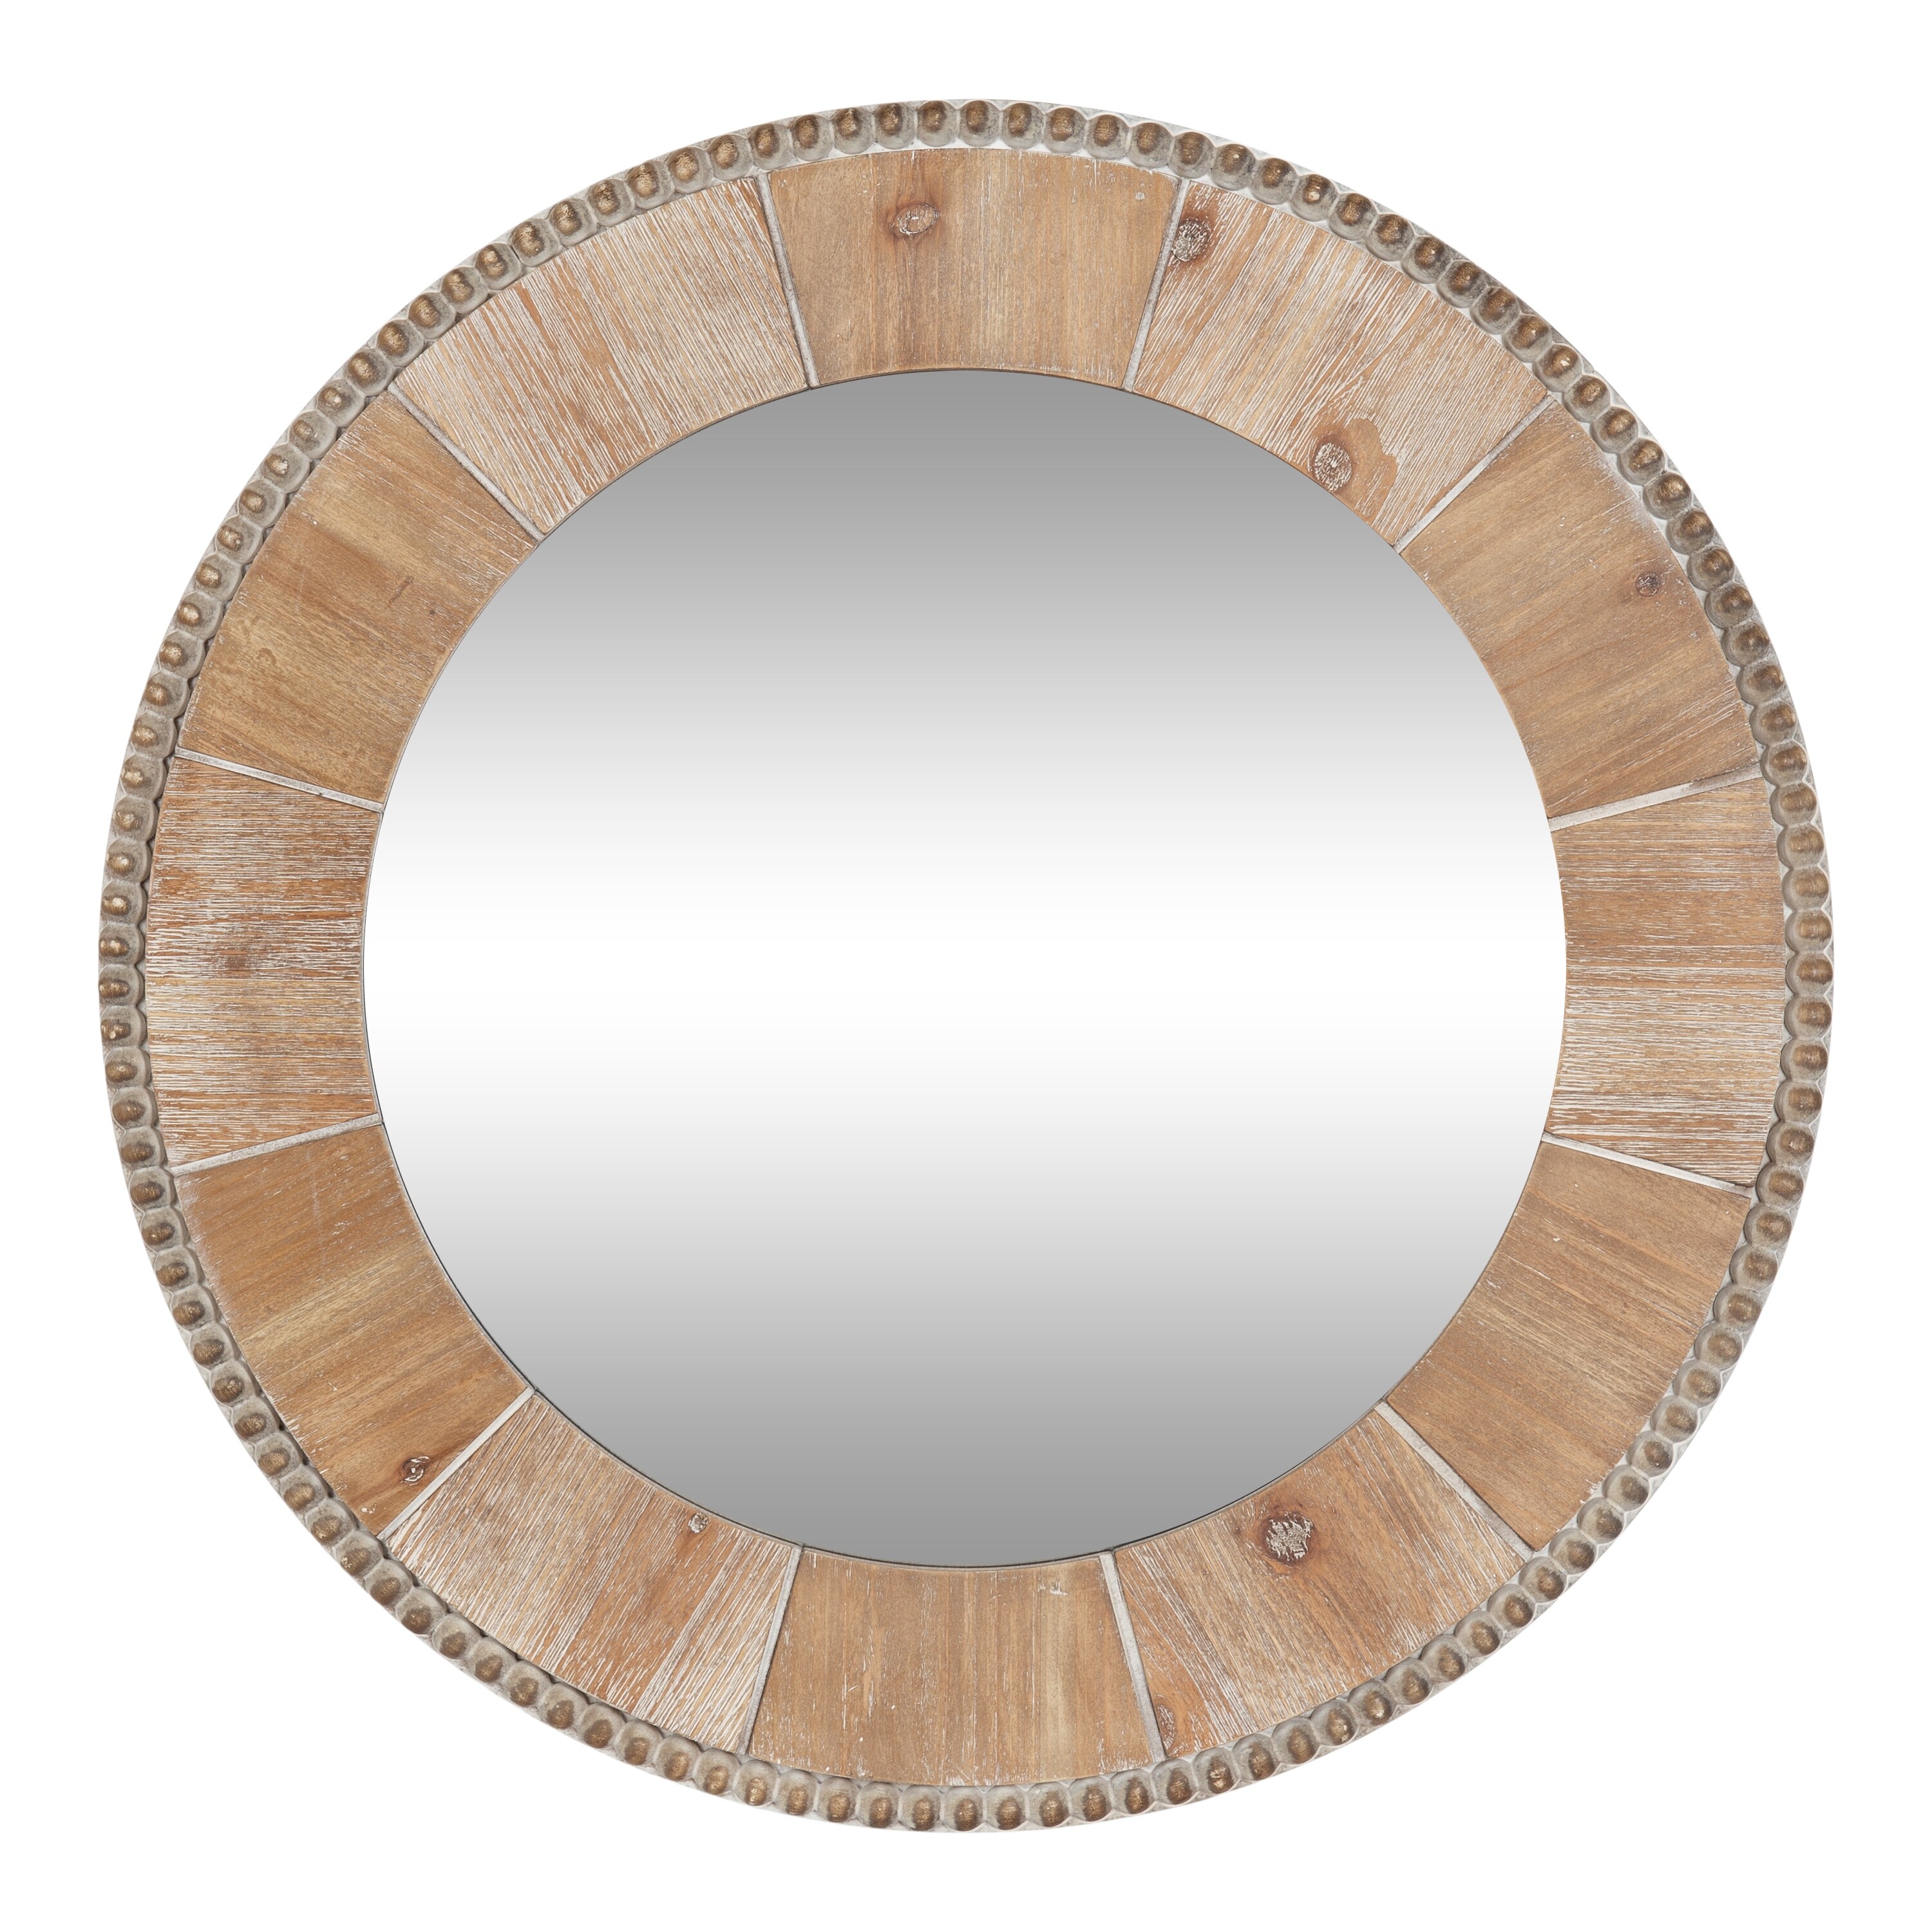 Kate and Laurel Calona Pieced Decorative Round Mirror - 26" Diameter